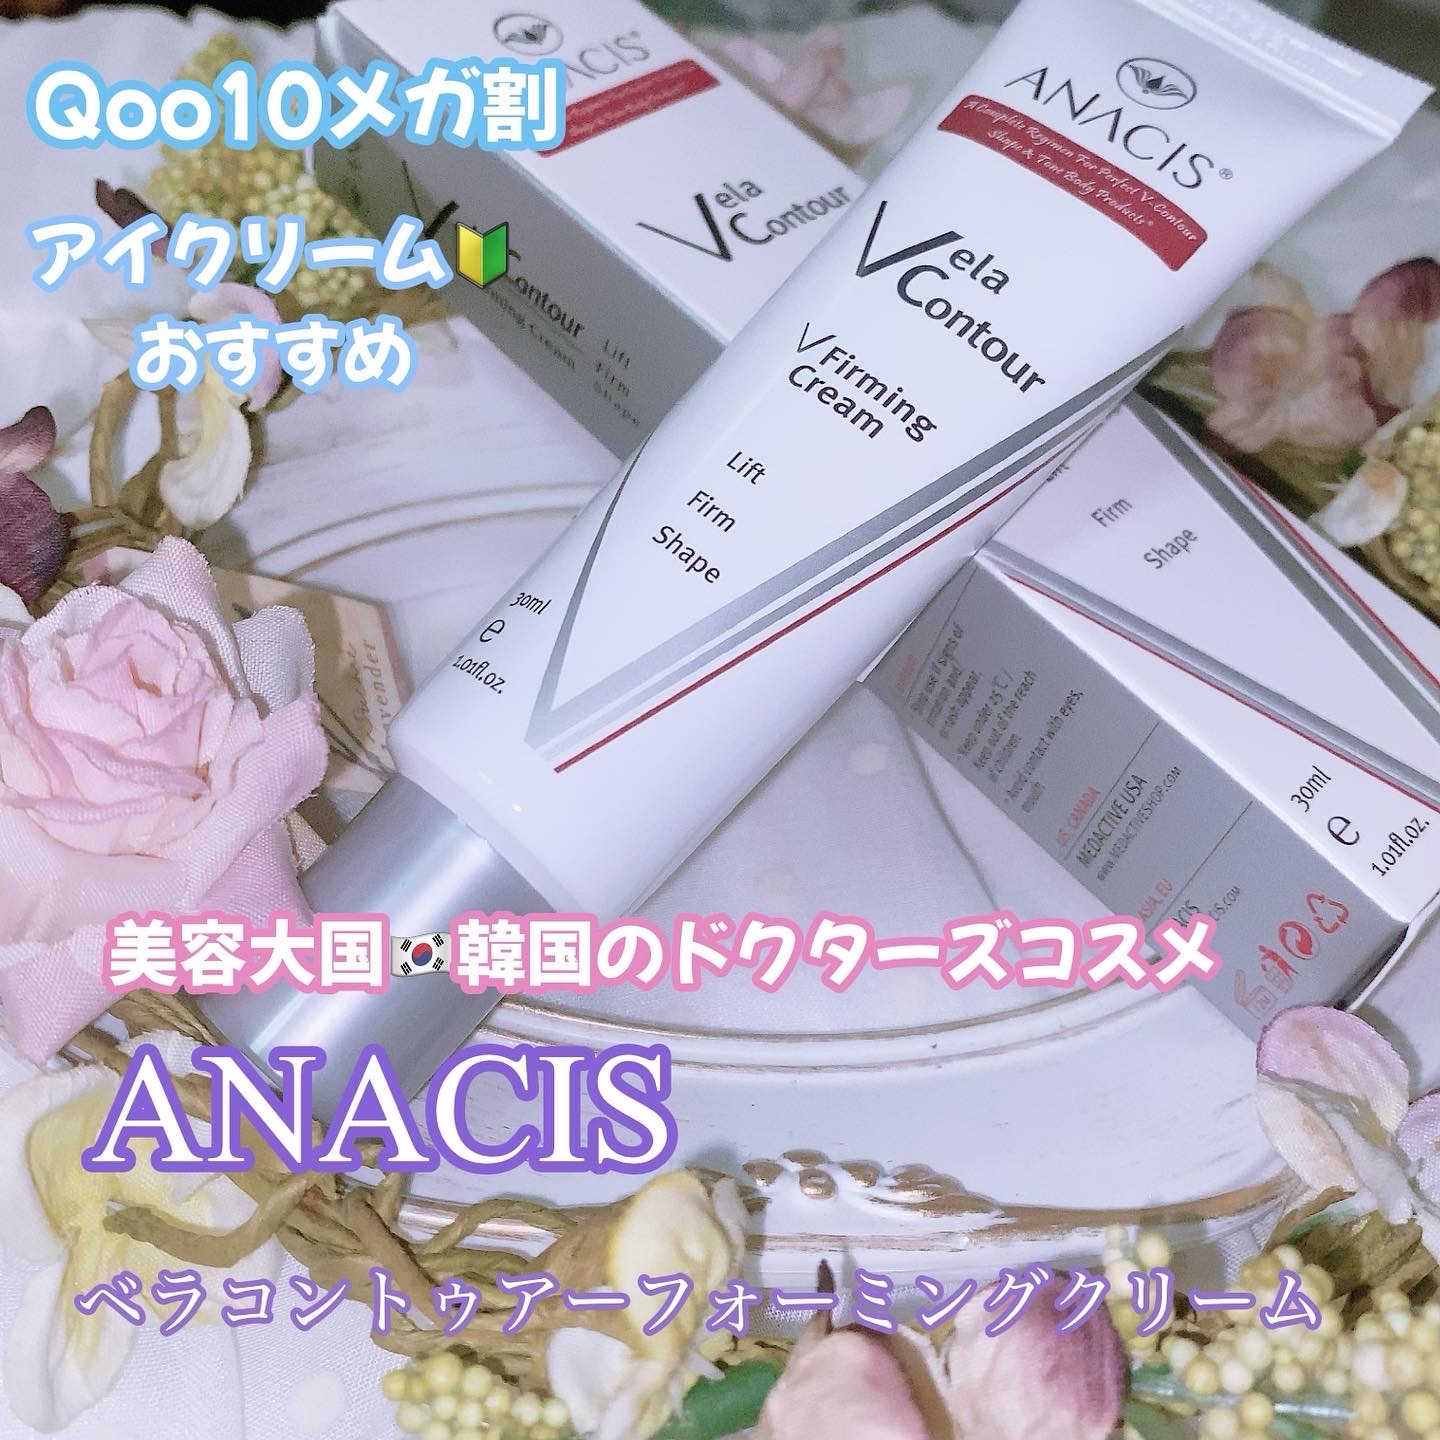 ANACIS(アナシス) ベラコントゥアーフォーミングクリームの良い点・メリットに関する珈琲豆♡さんの口コミ画像1